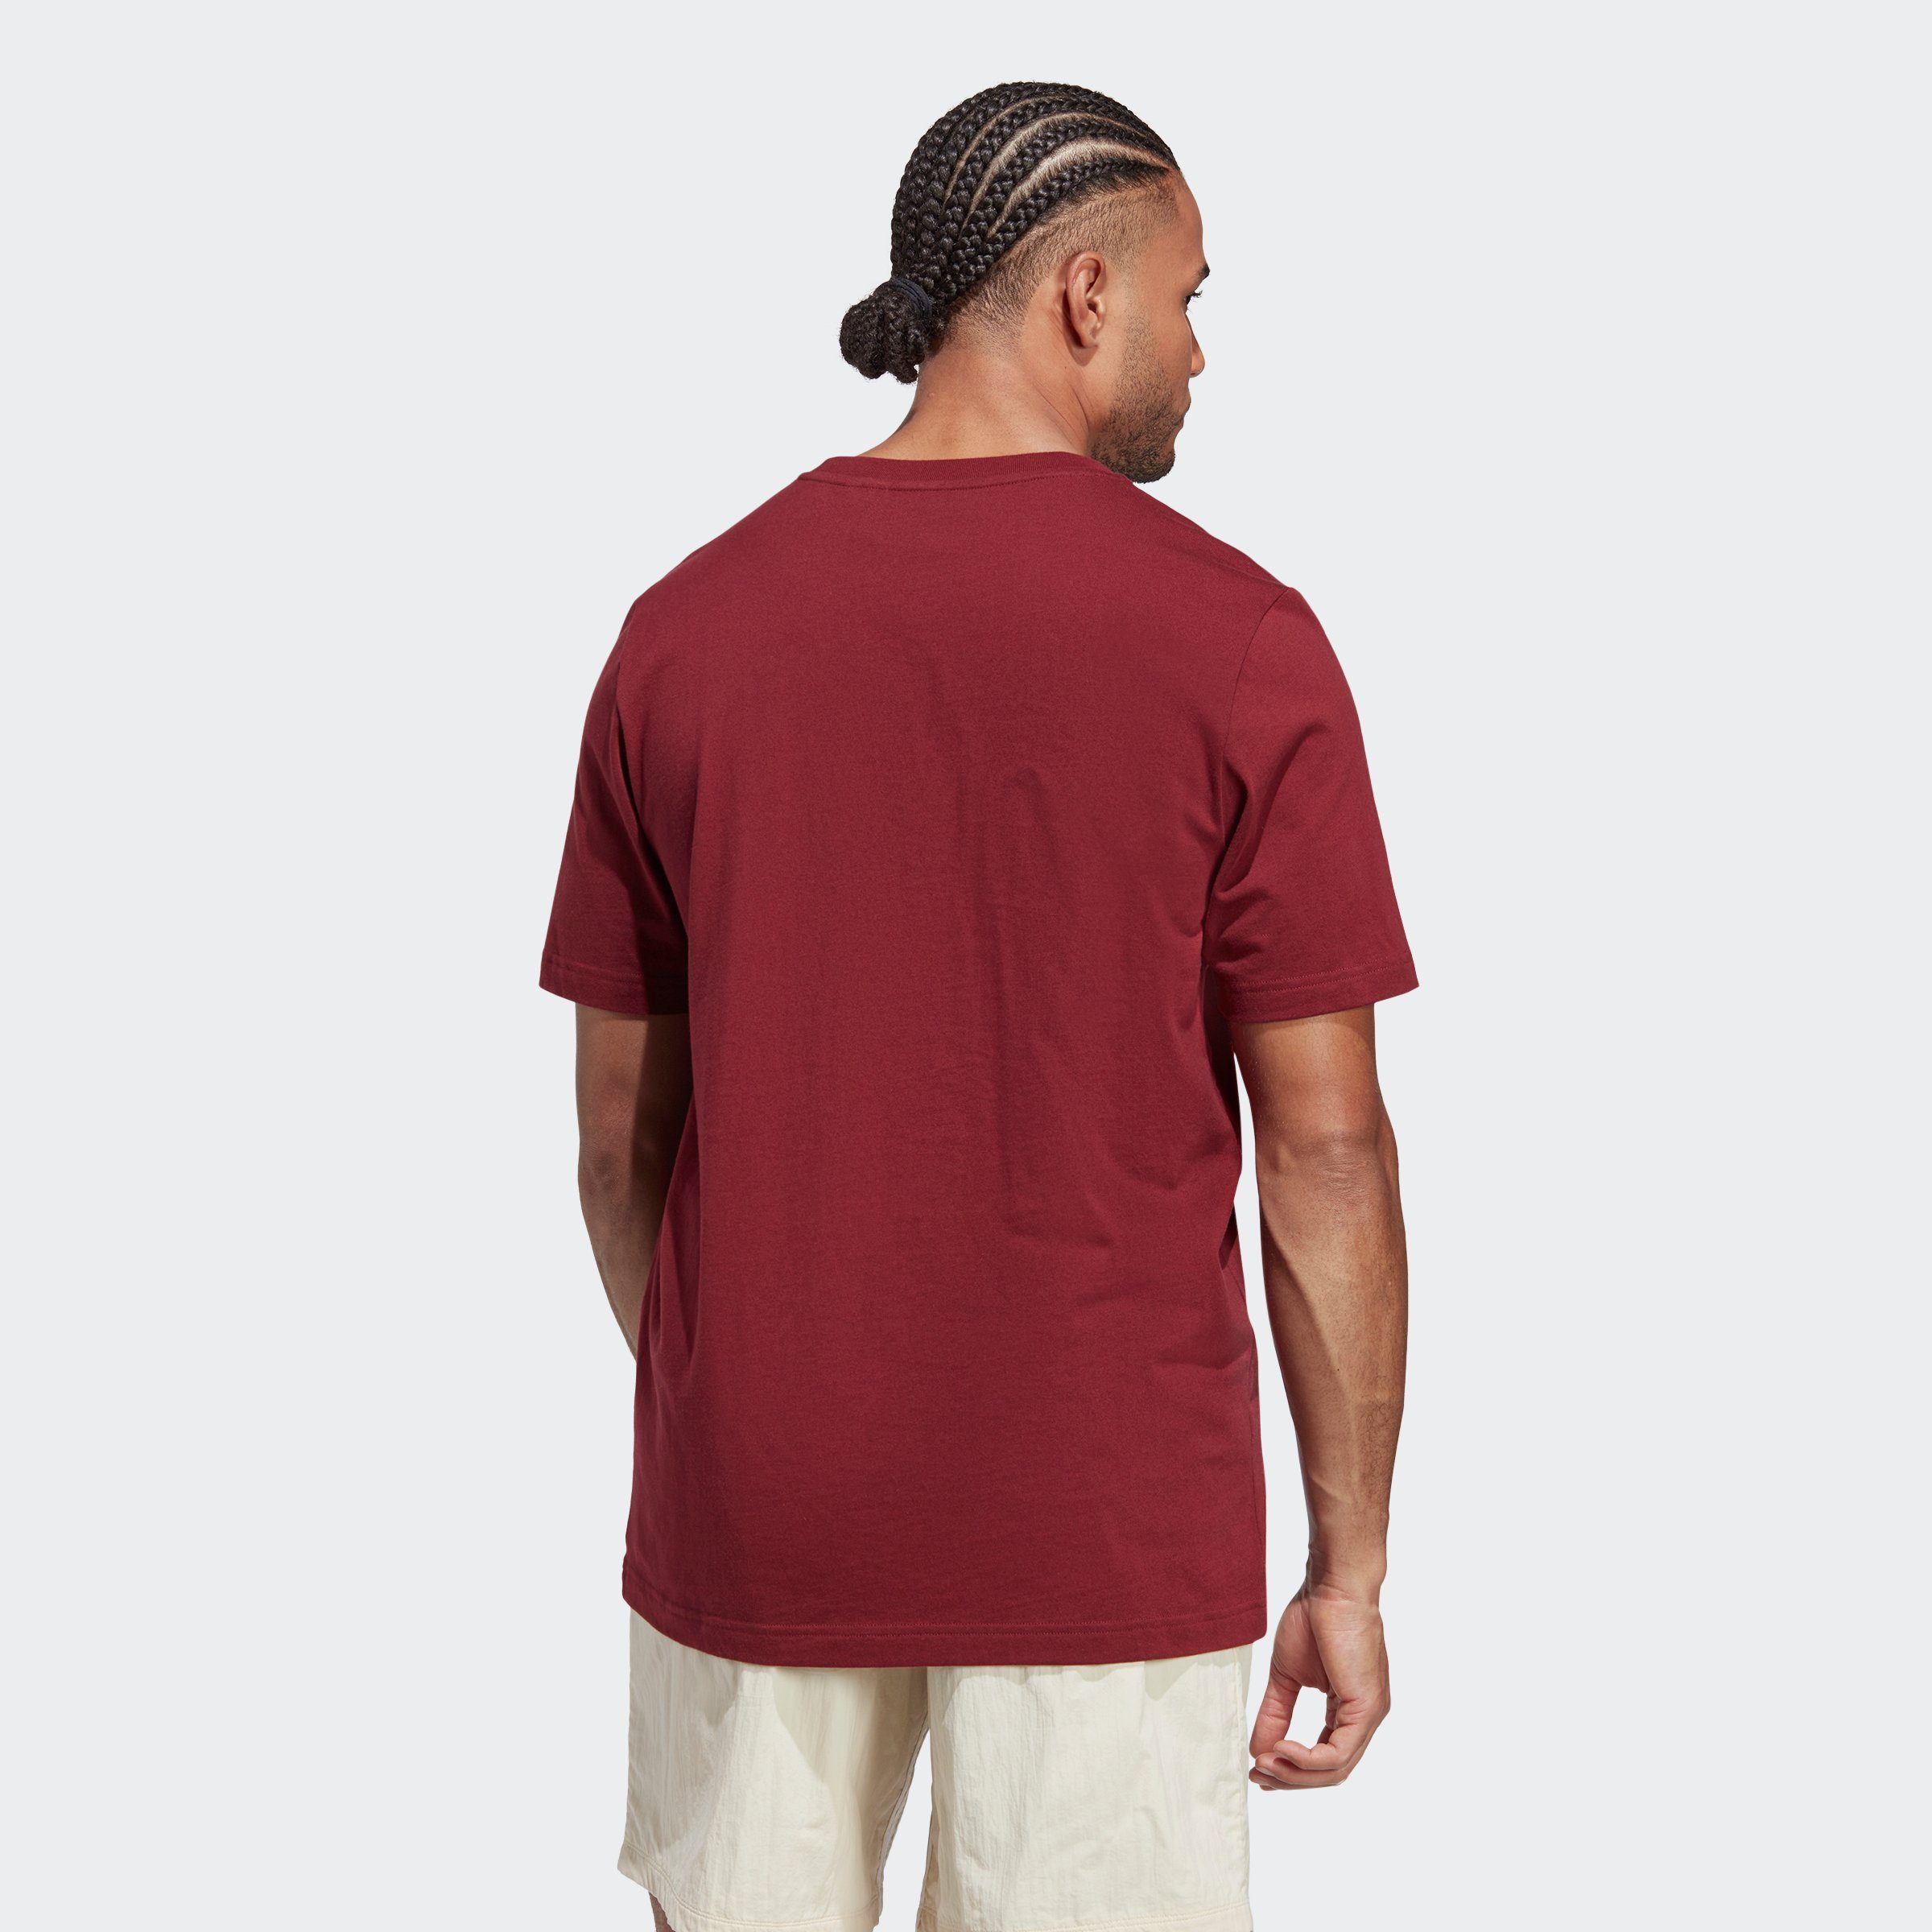 AAC METRO Shadow T-Shirt Originals RIFTA Red ADIDAS adidas